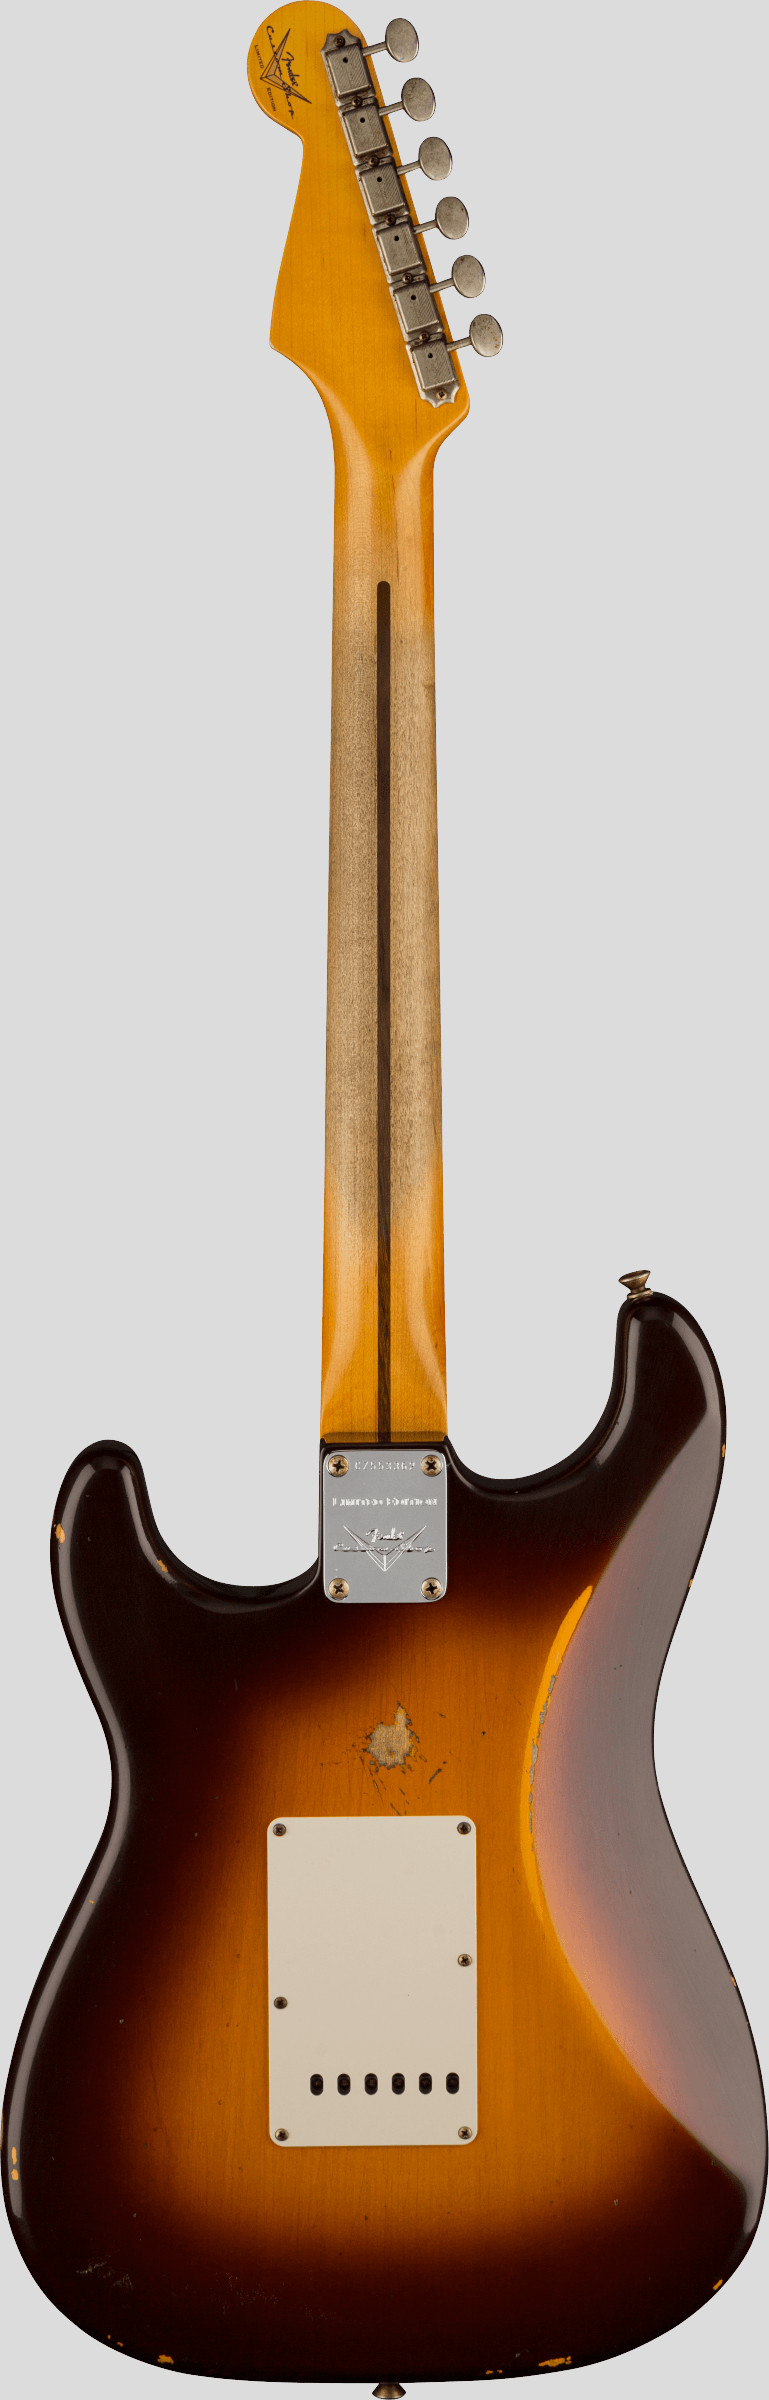 Fender Custom Shop Limited Edition Fat 50 Stratocaster Wide Fade Chocolate 2-Color Sunburst Relic 2